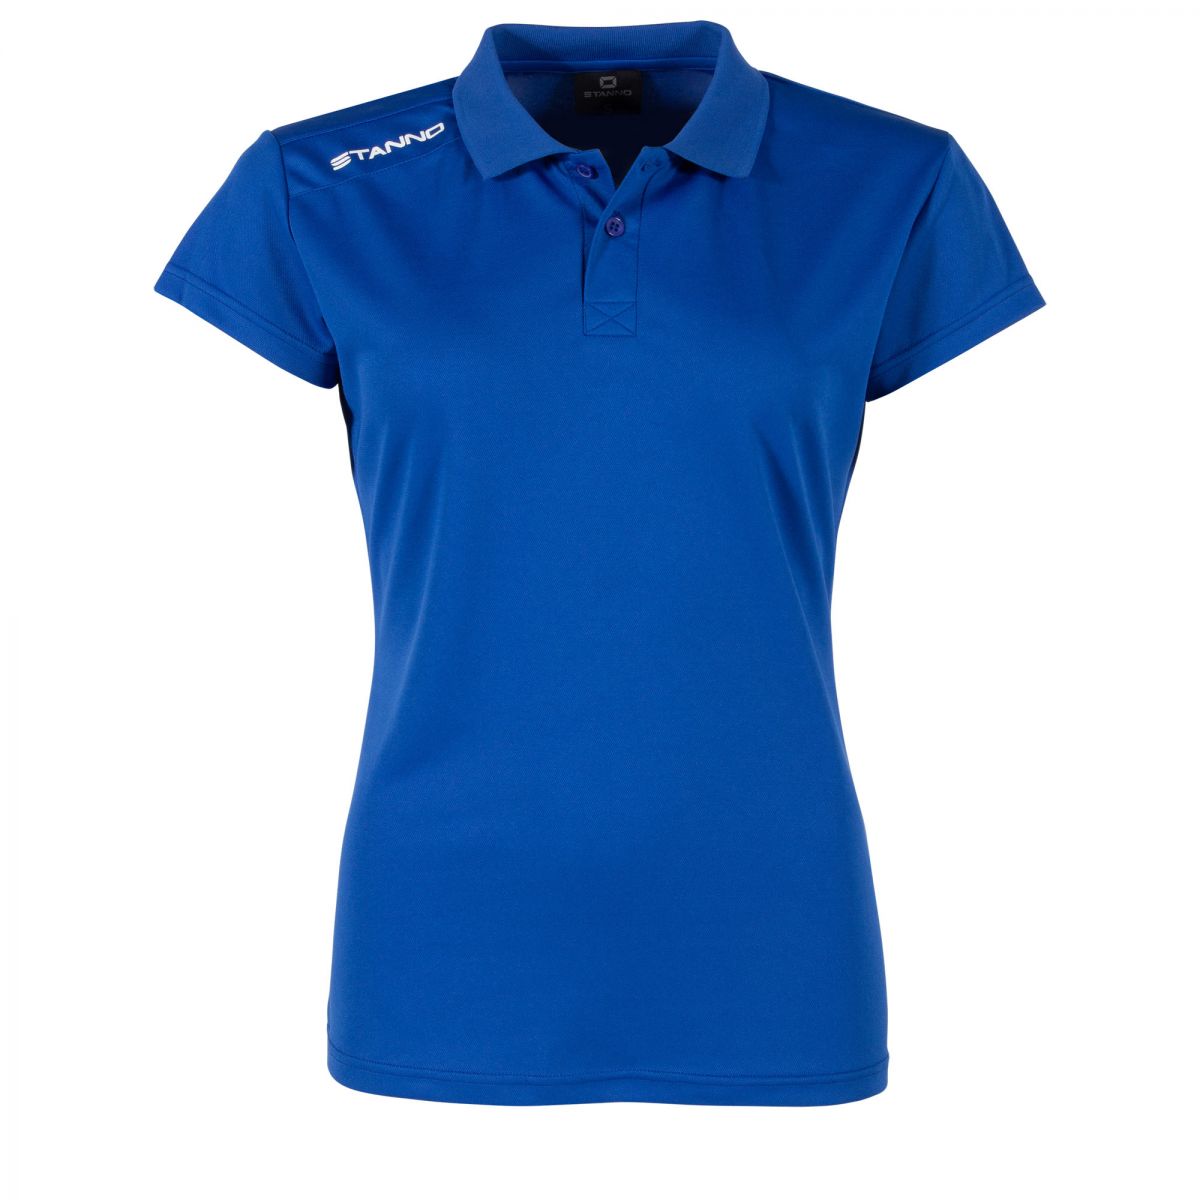 Stanno Field Women's Polo Shirt